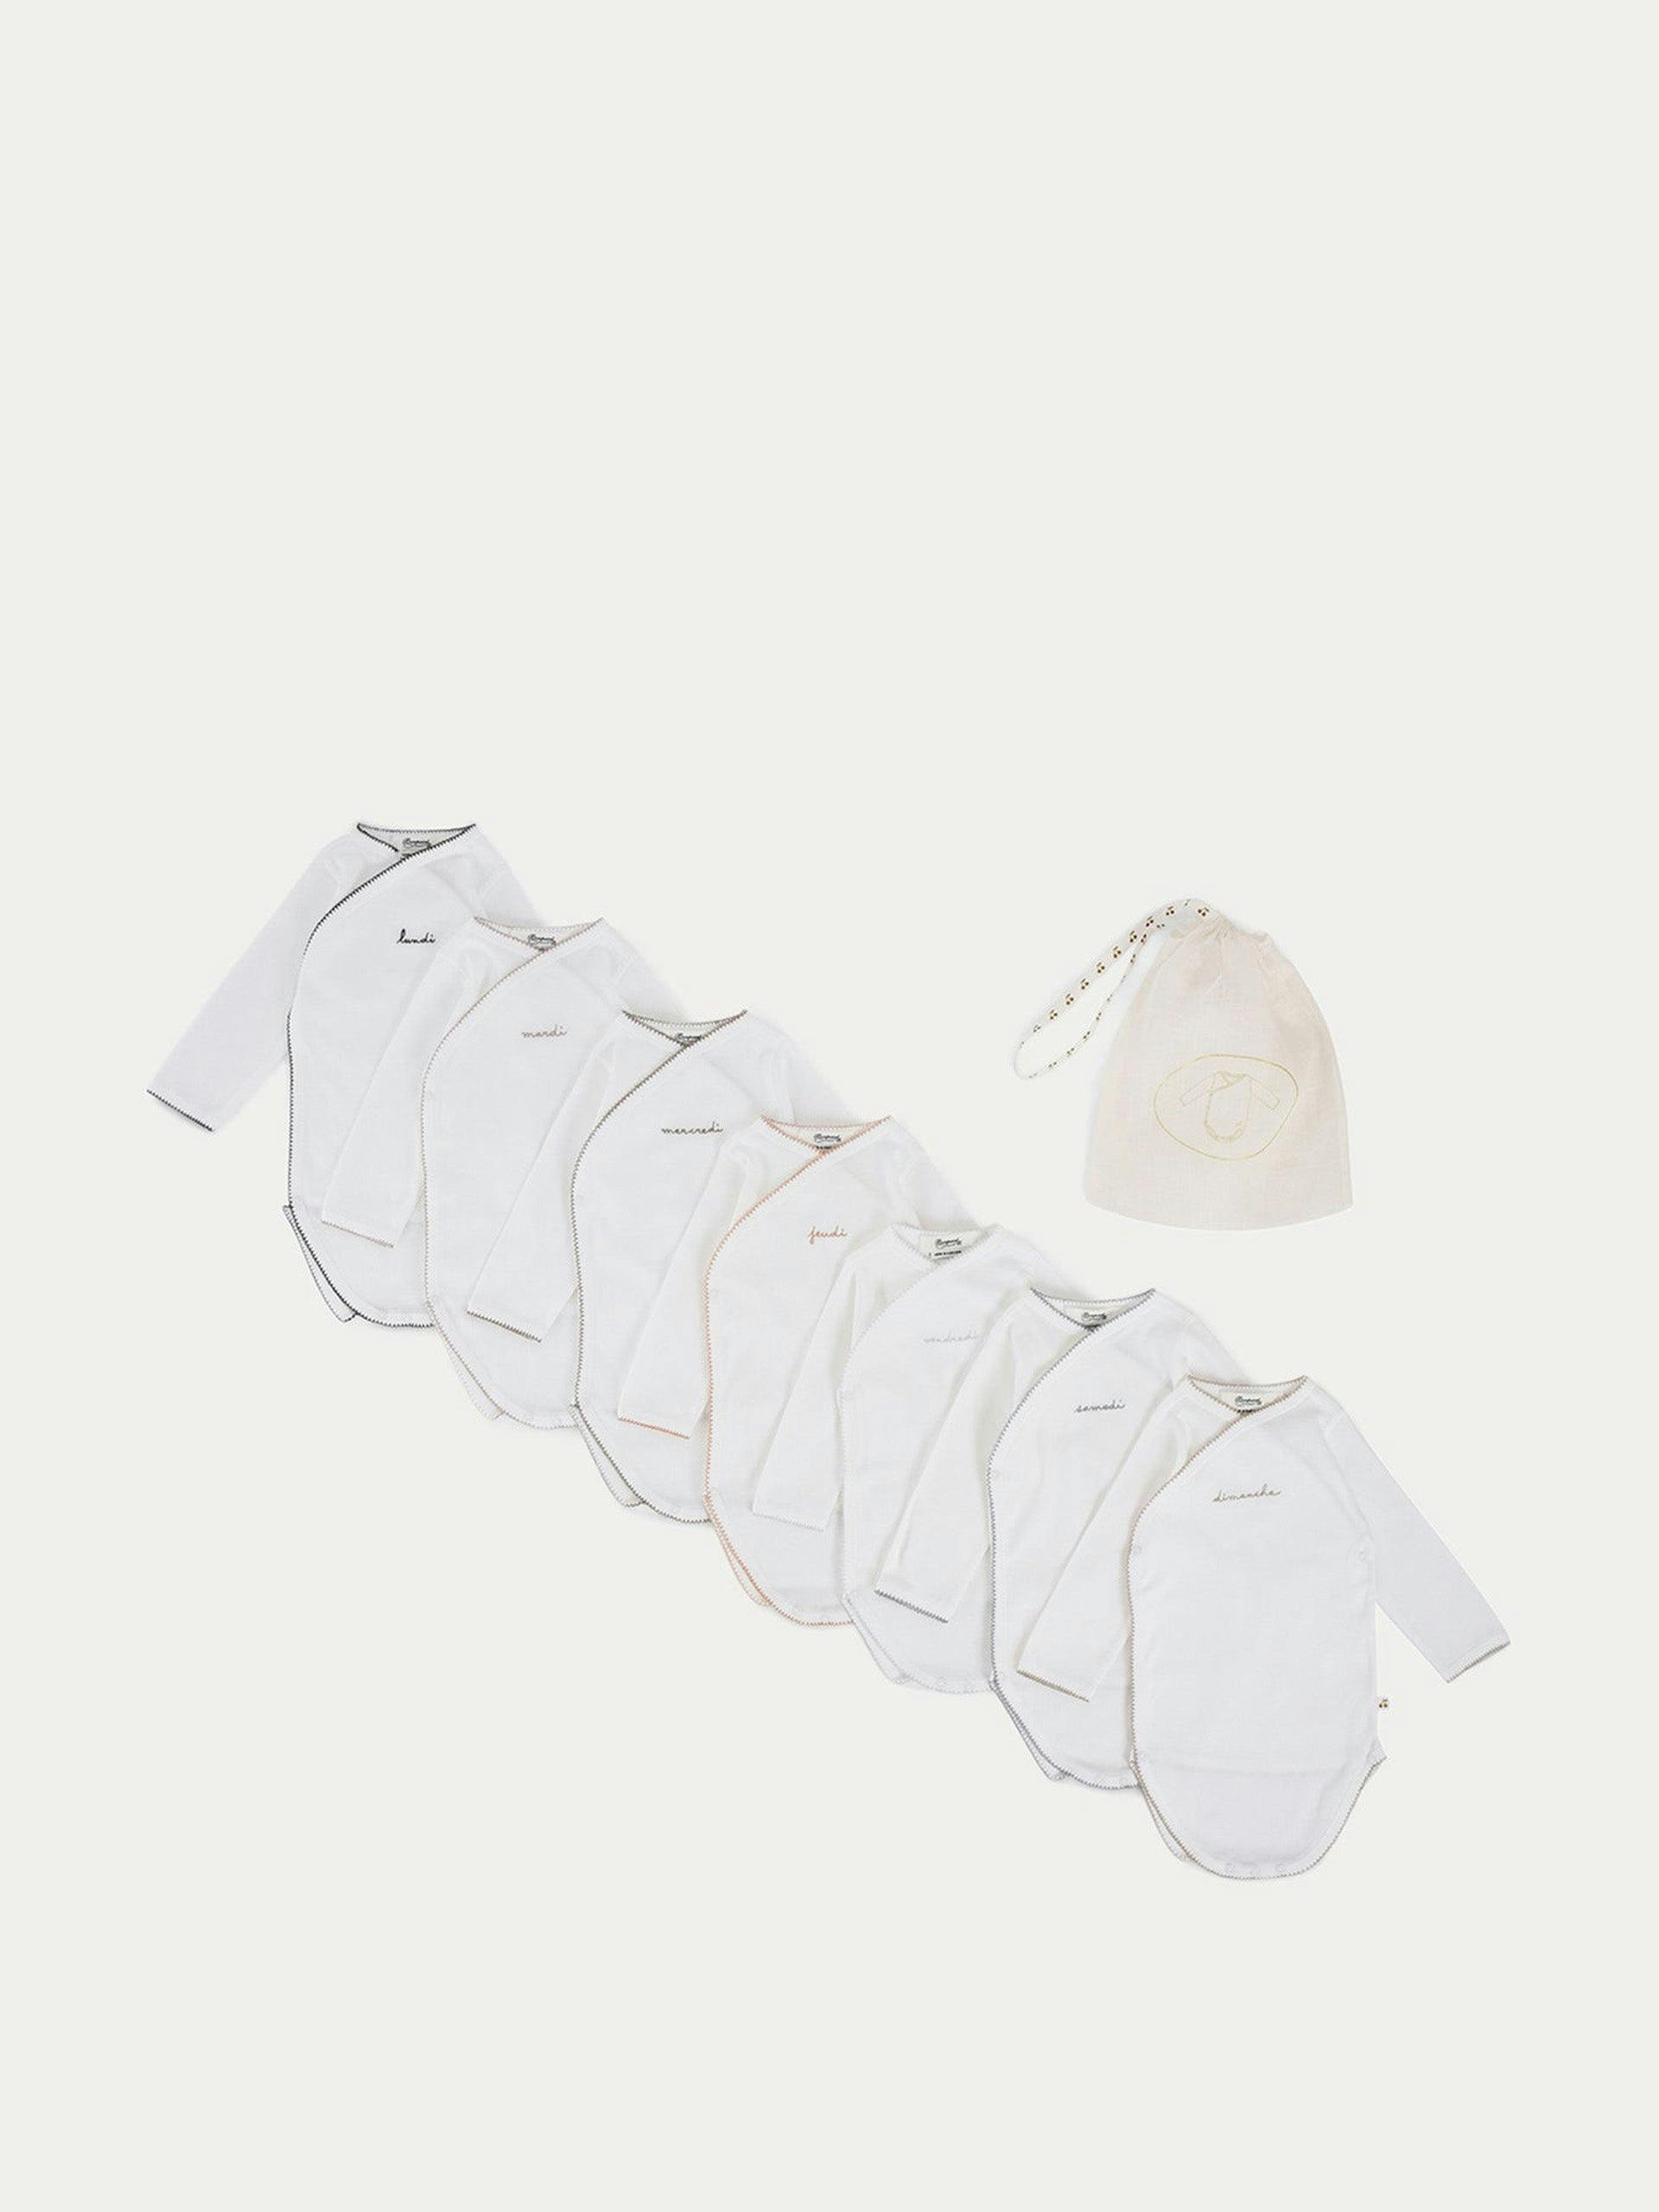 White crossover bodysuits (set of 7)